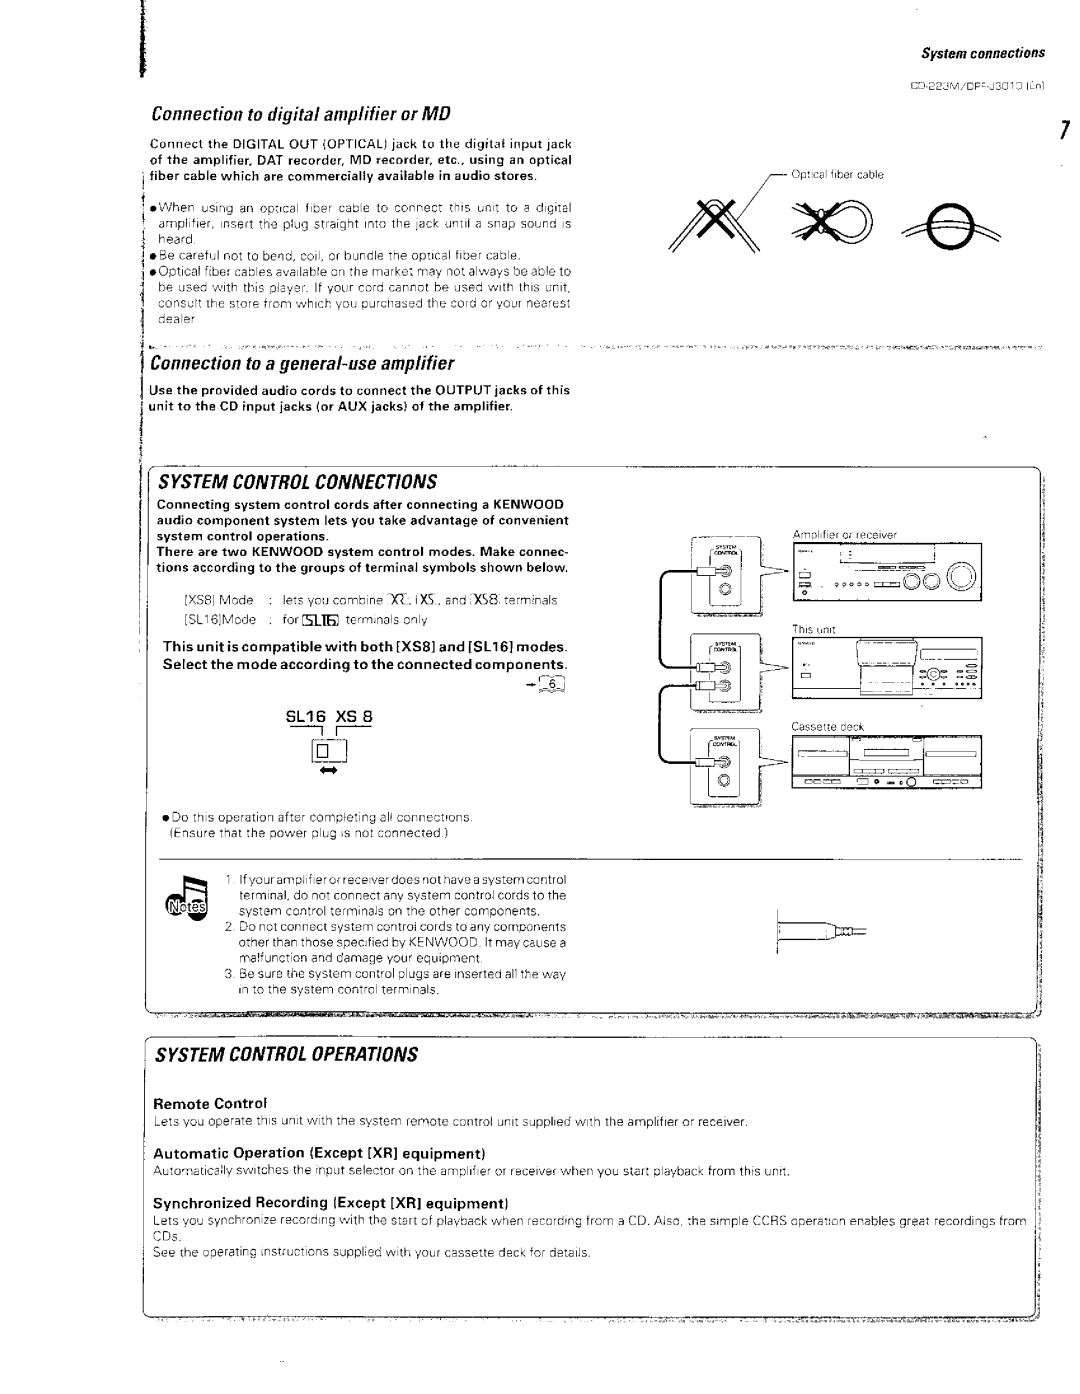 Kenwood 76, DPF-J3010, CD-223M, CD Player manual 